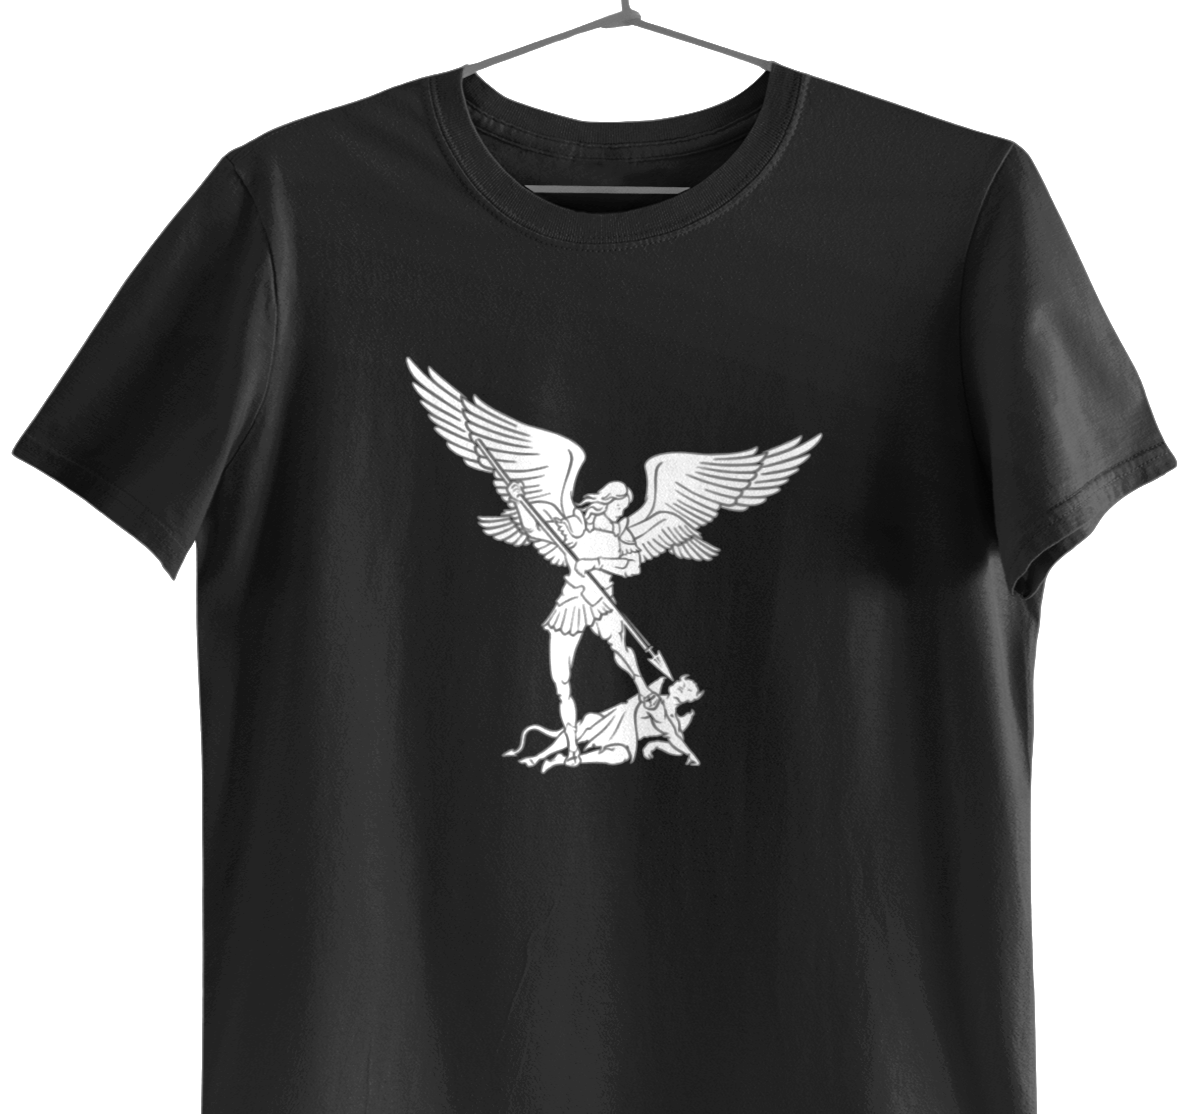 The St Michael T-Shirt